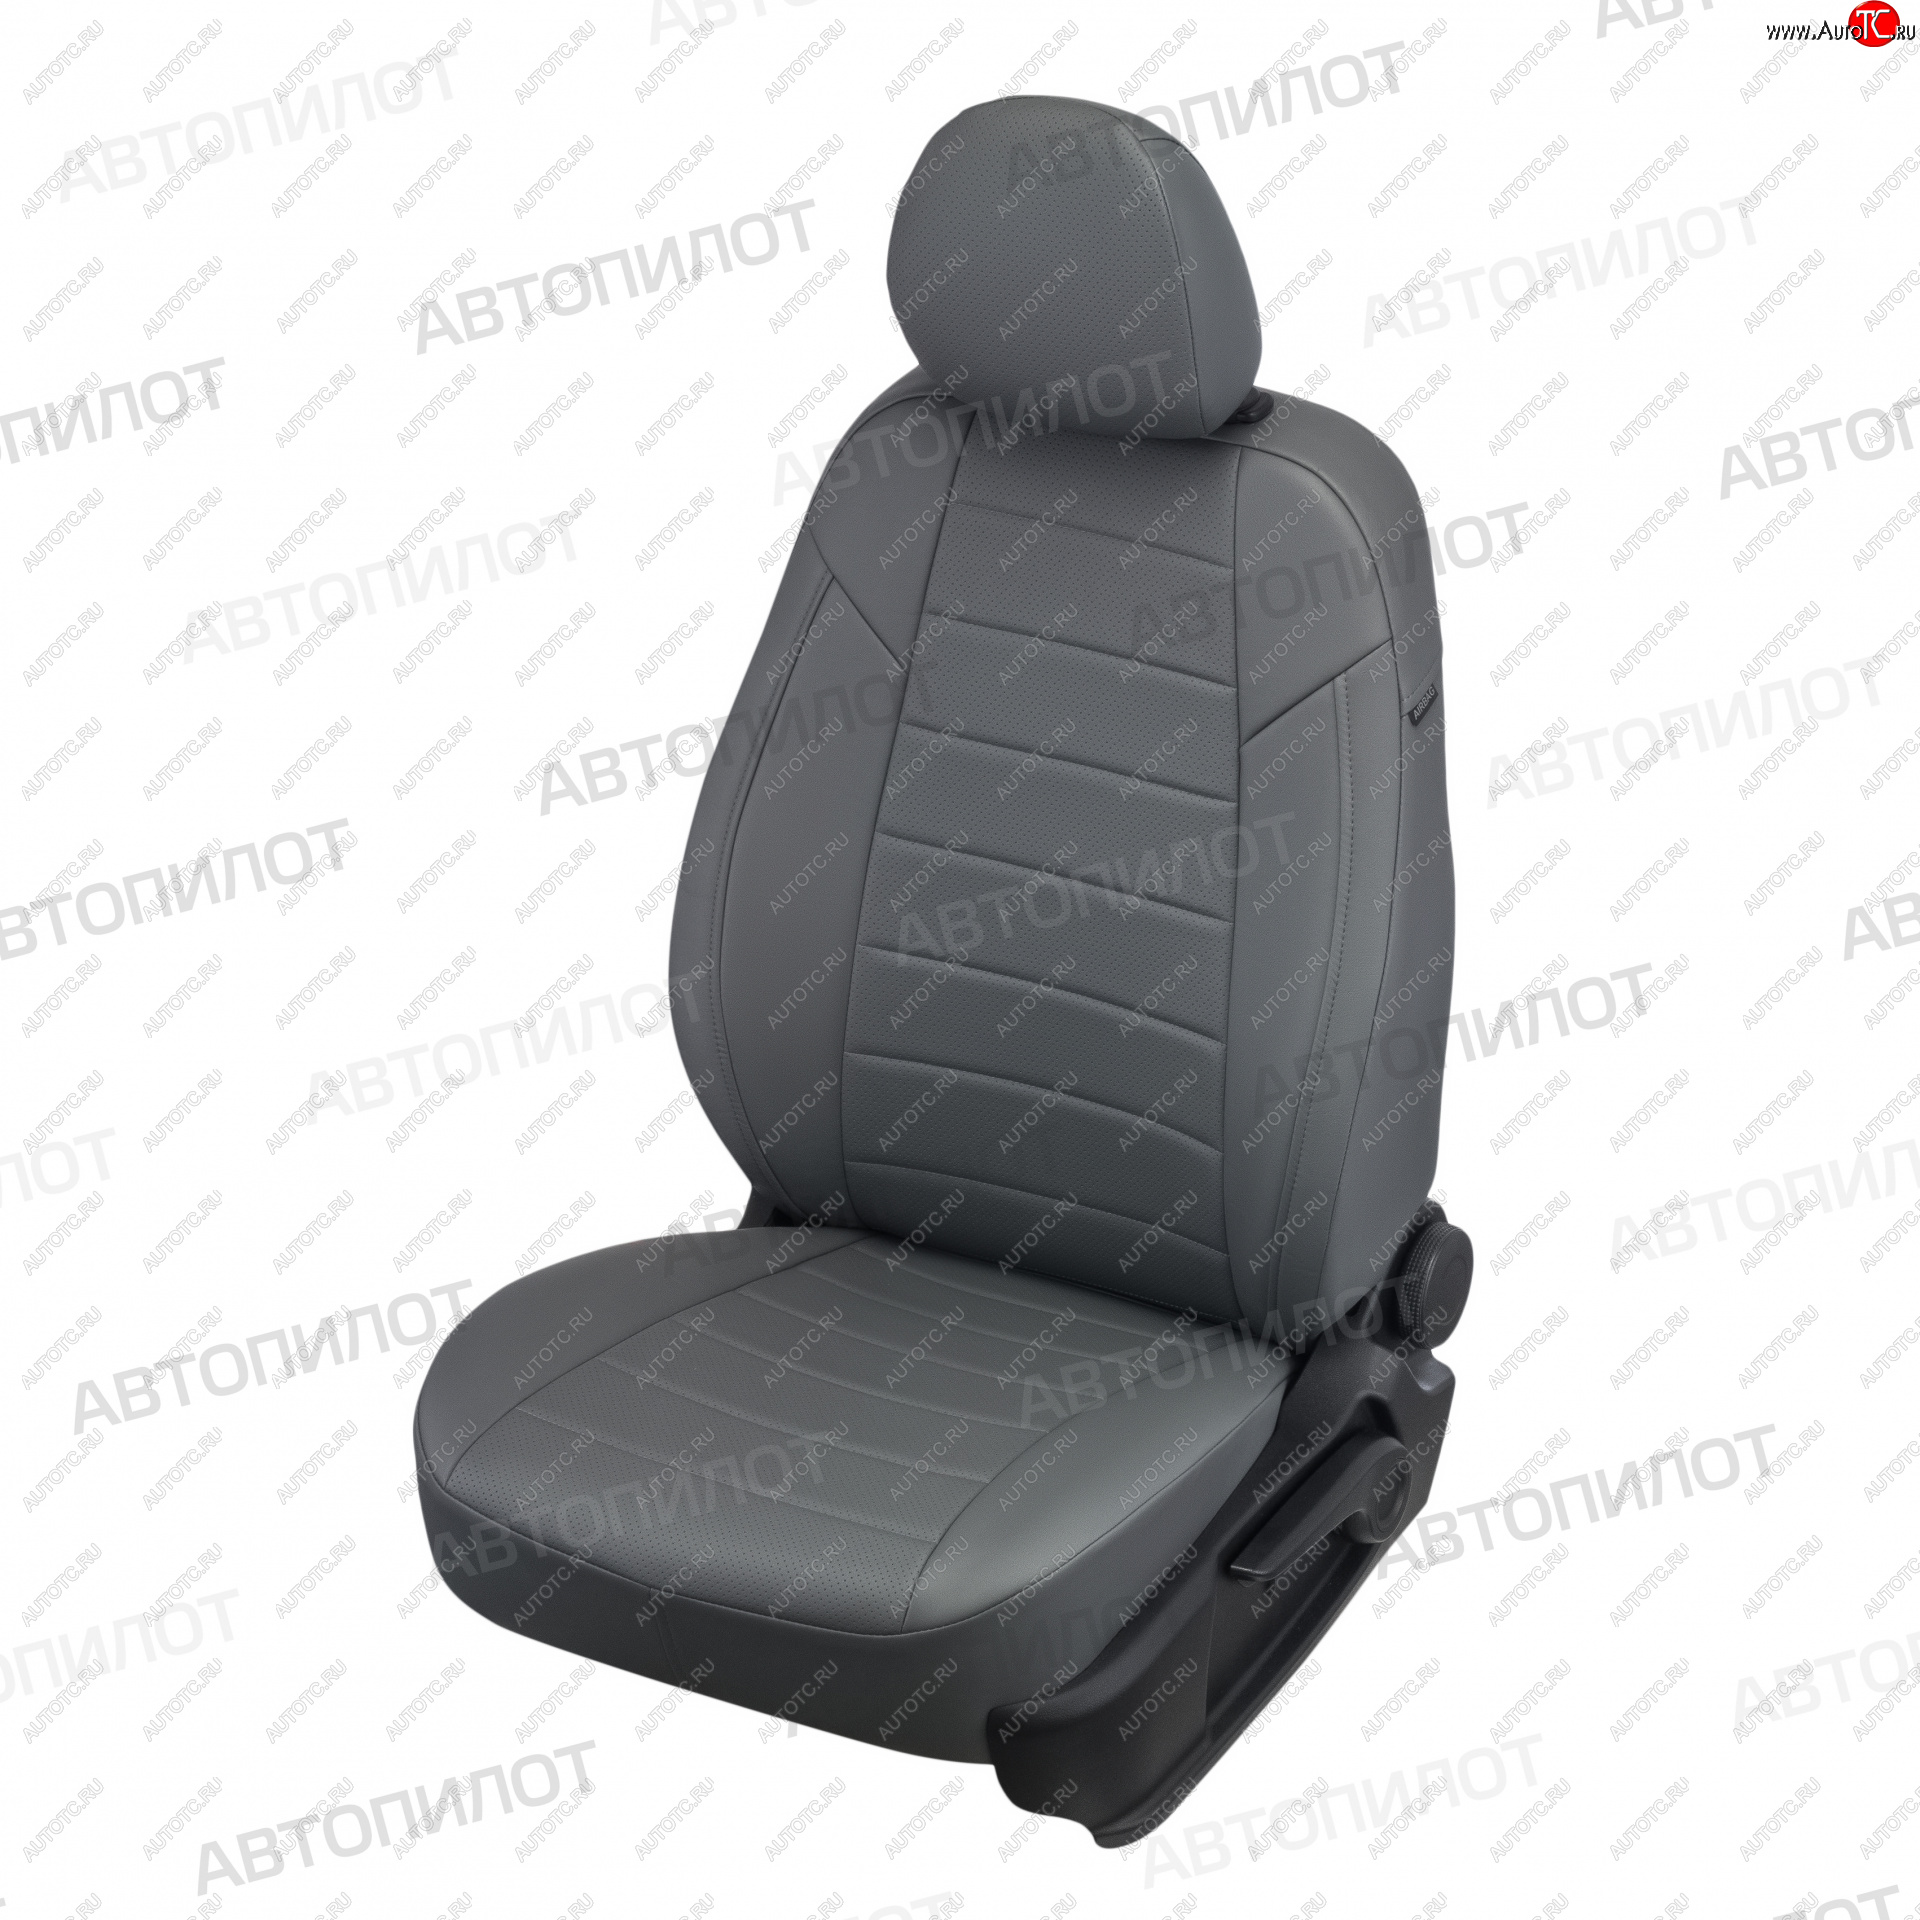 13 849 р. Чехлы сидений (экокожа) Автопилот  Honda CR-V  RD1,RD2,RD3 (1995-2001) (серый)